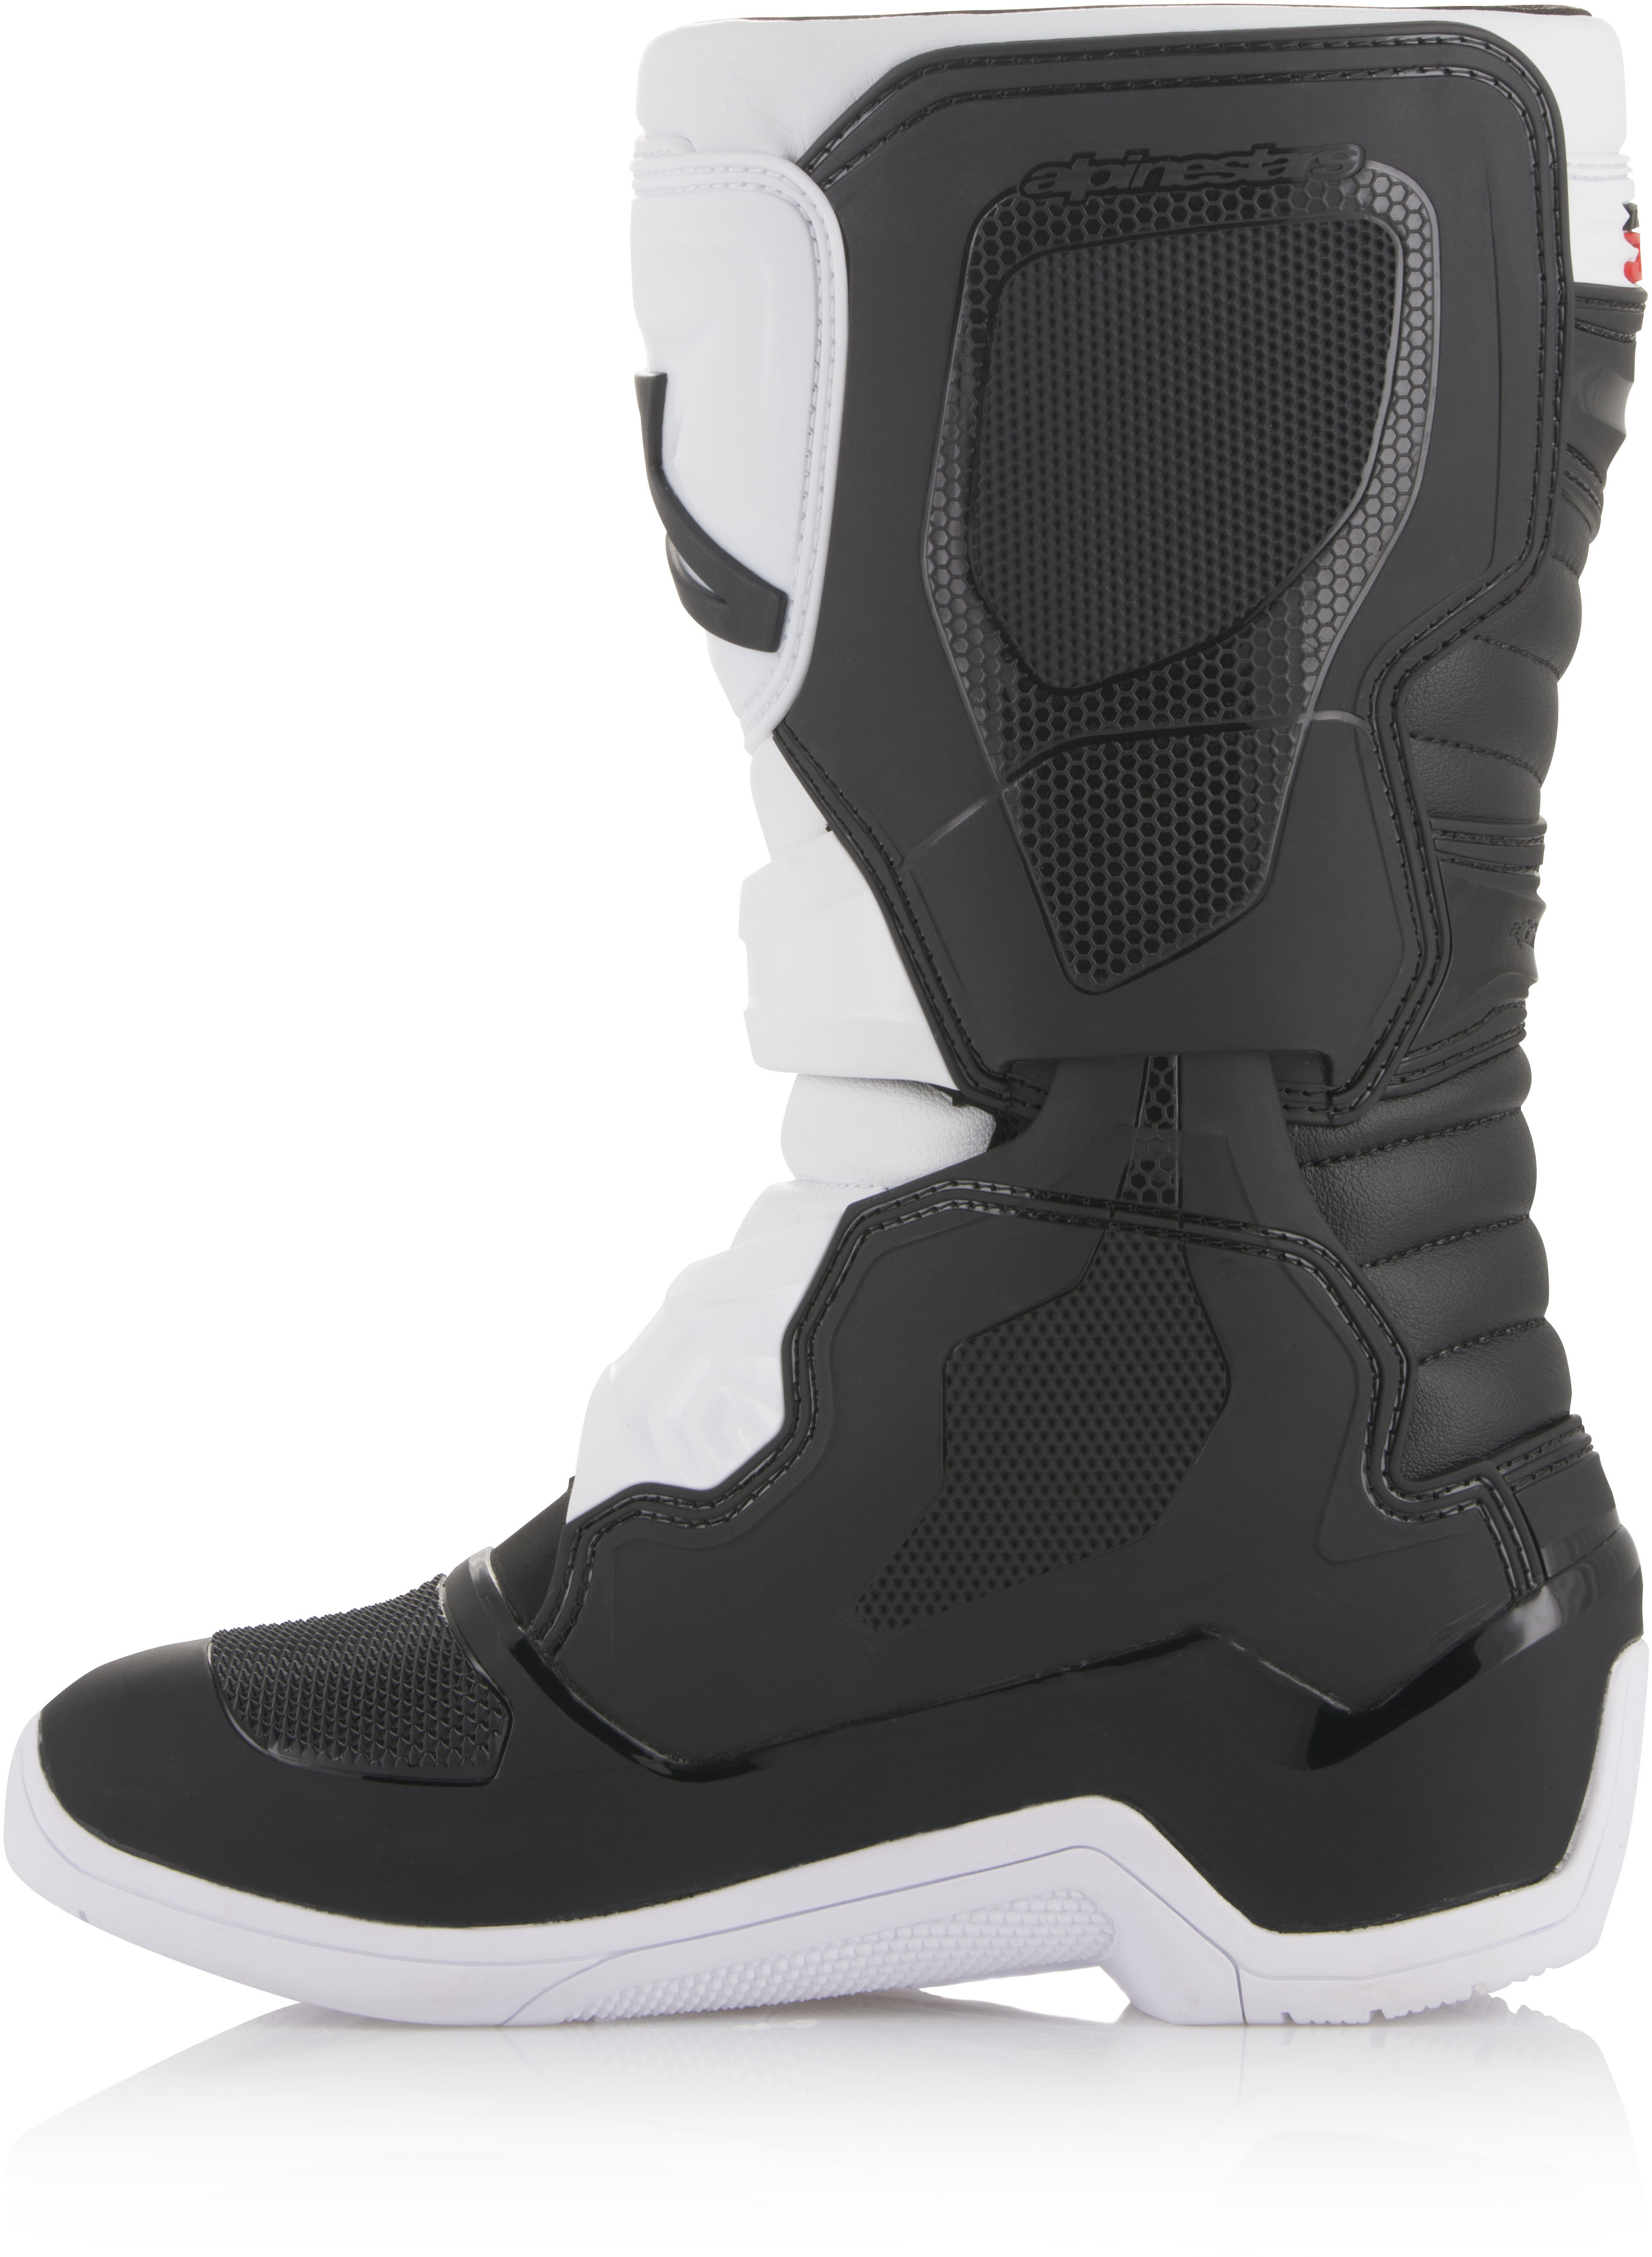 Tech 3S Boots Black/White Size 3 - Click Image to Close